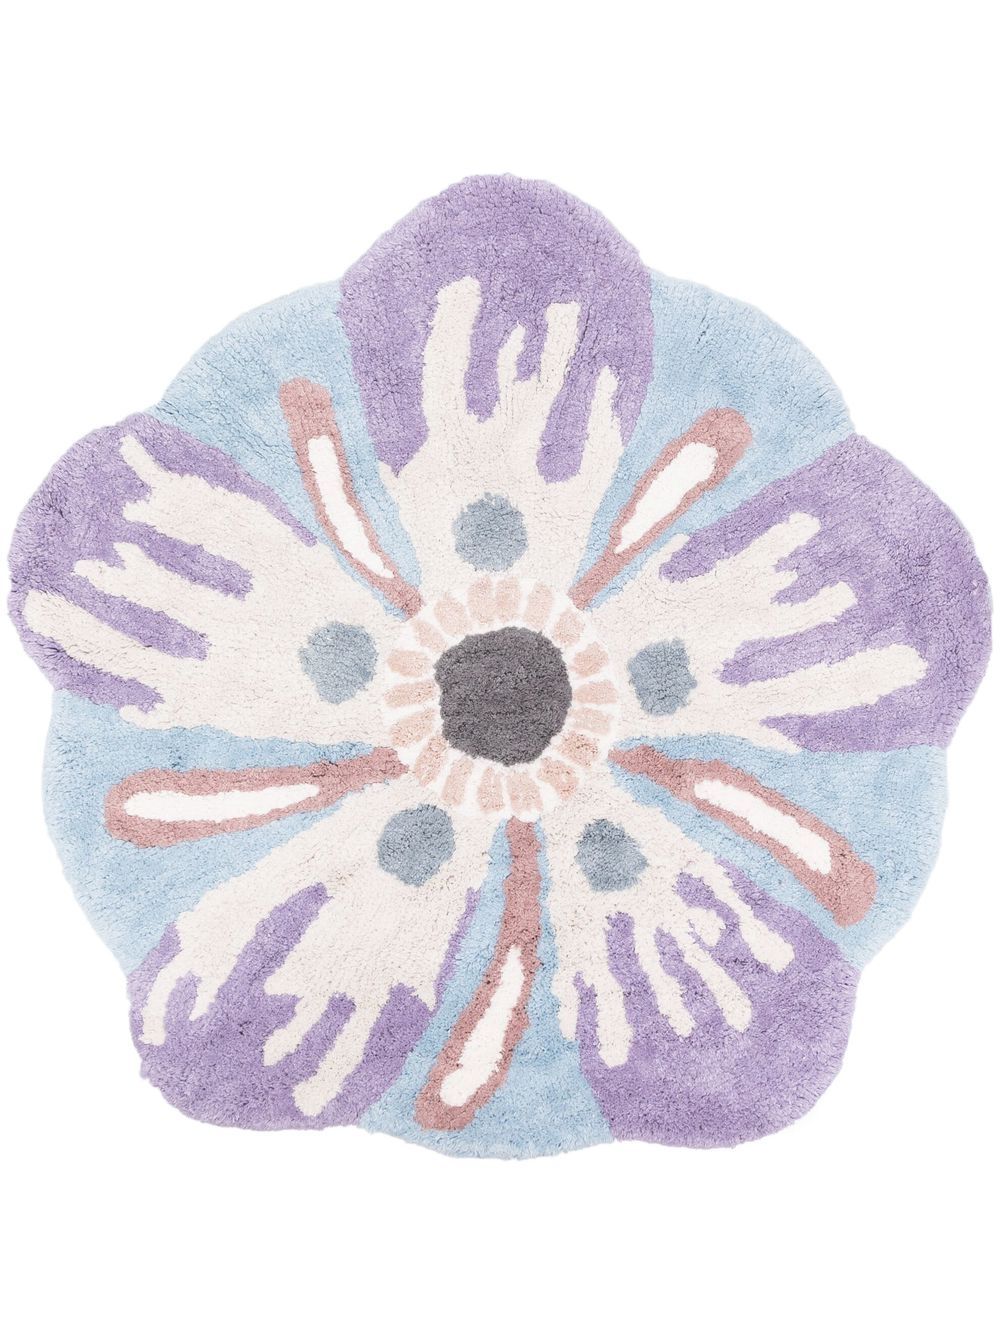 Missoni Home Floral Embroidered Bath Mat - Farfetch